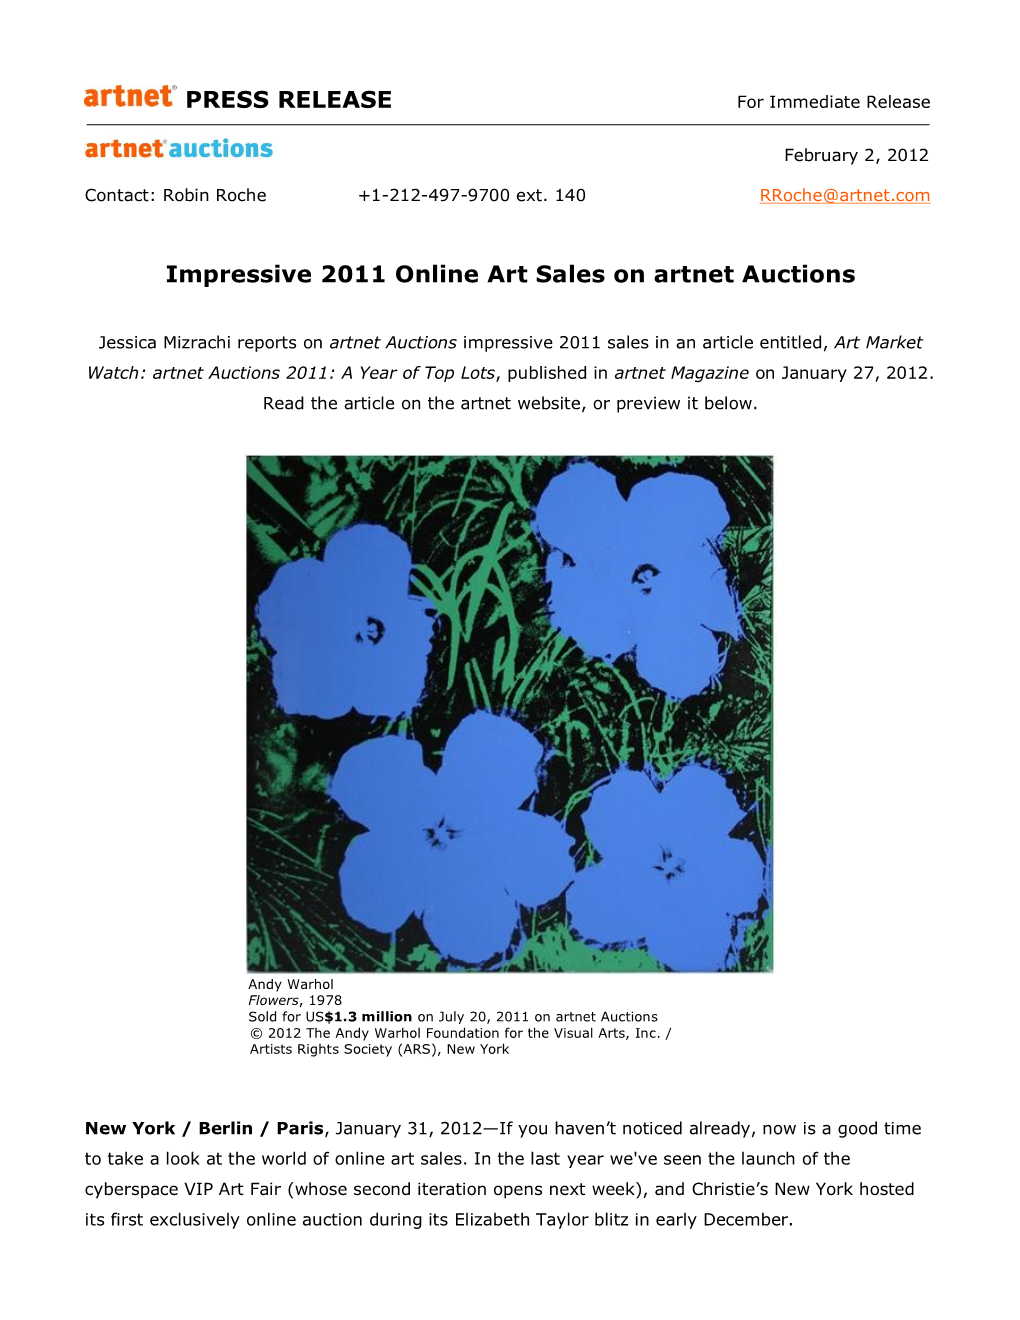 Impressive 2011 Online Art Sales on Artnet Auctions